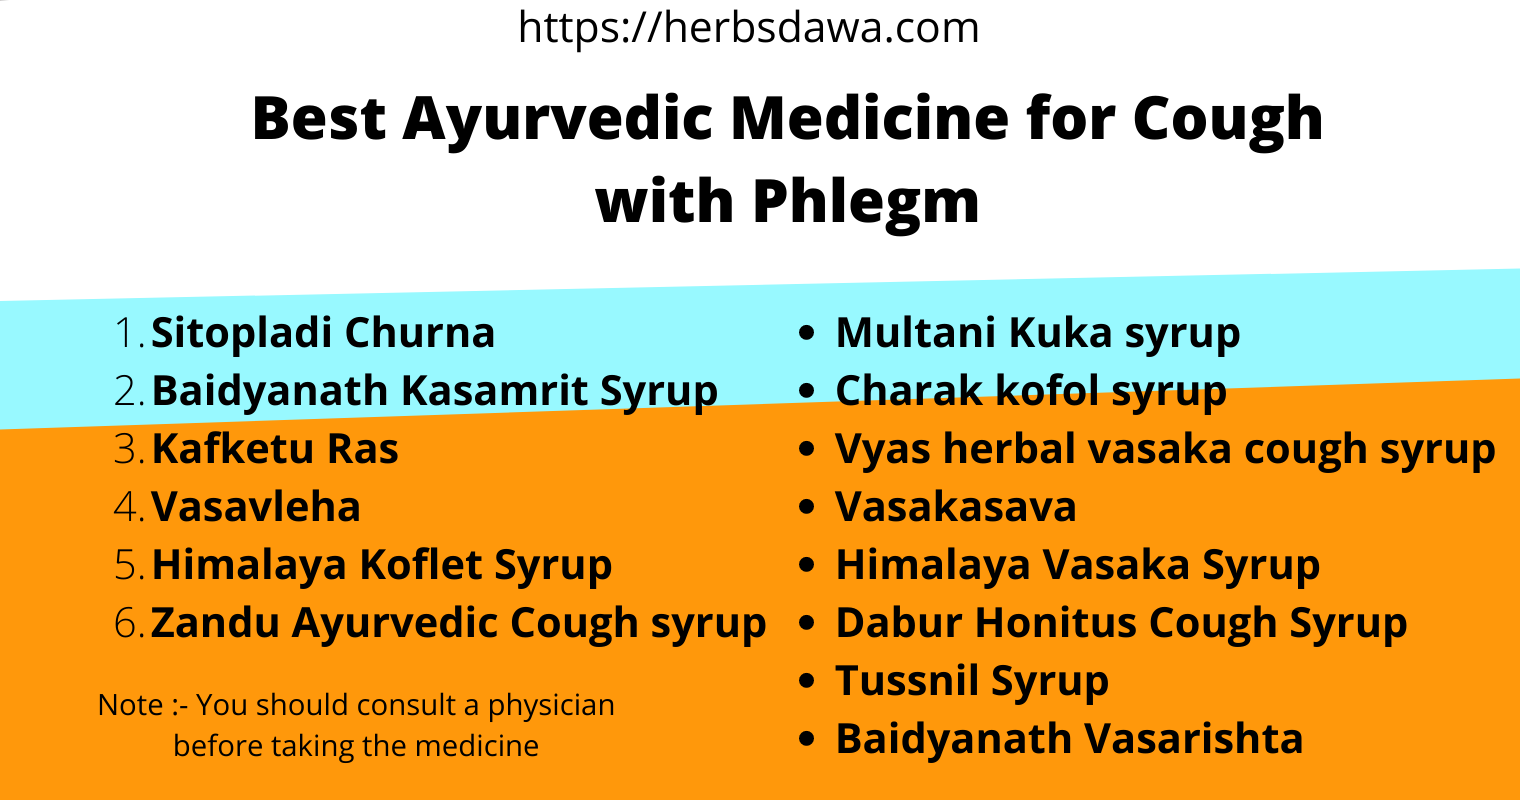 Ayurvedic Medicine for cough with phlegm